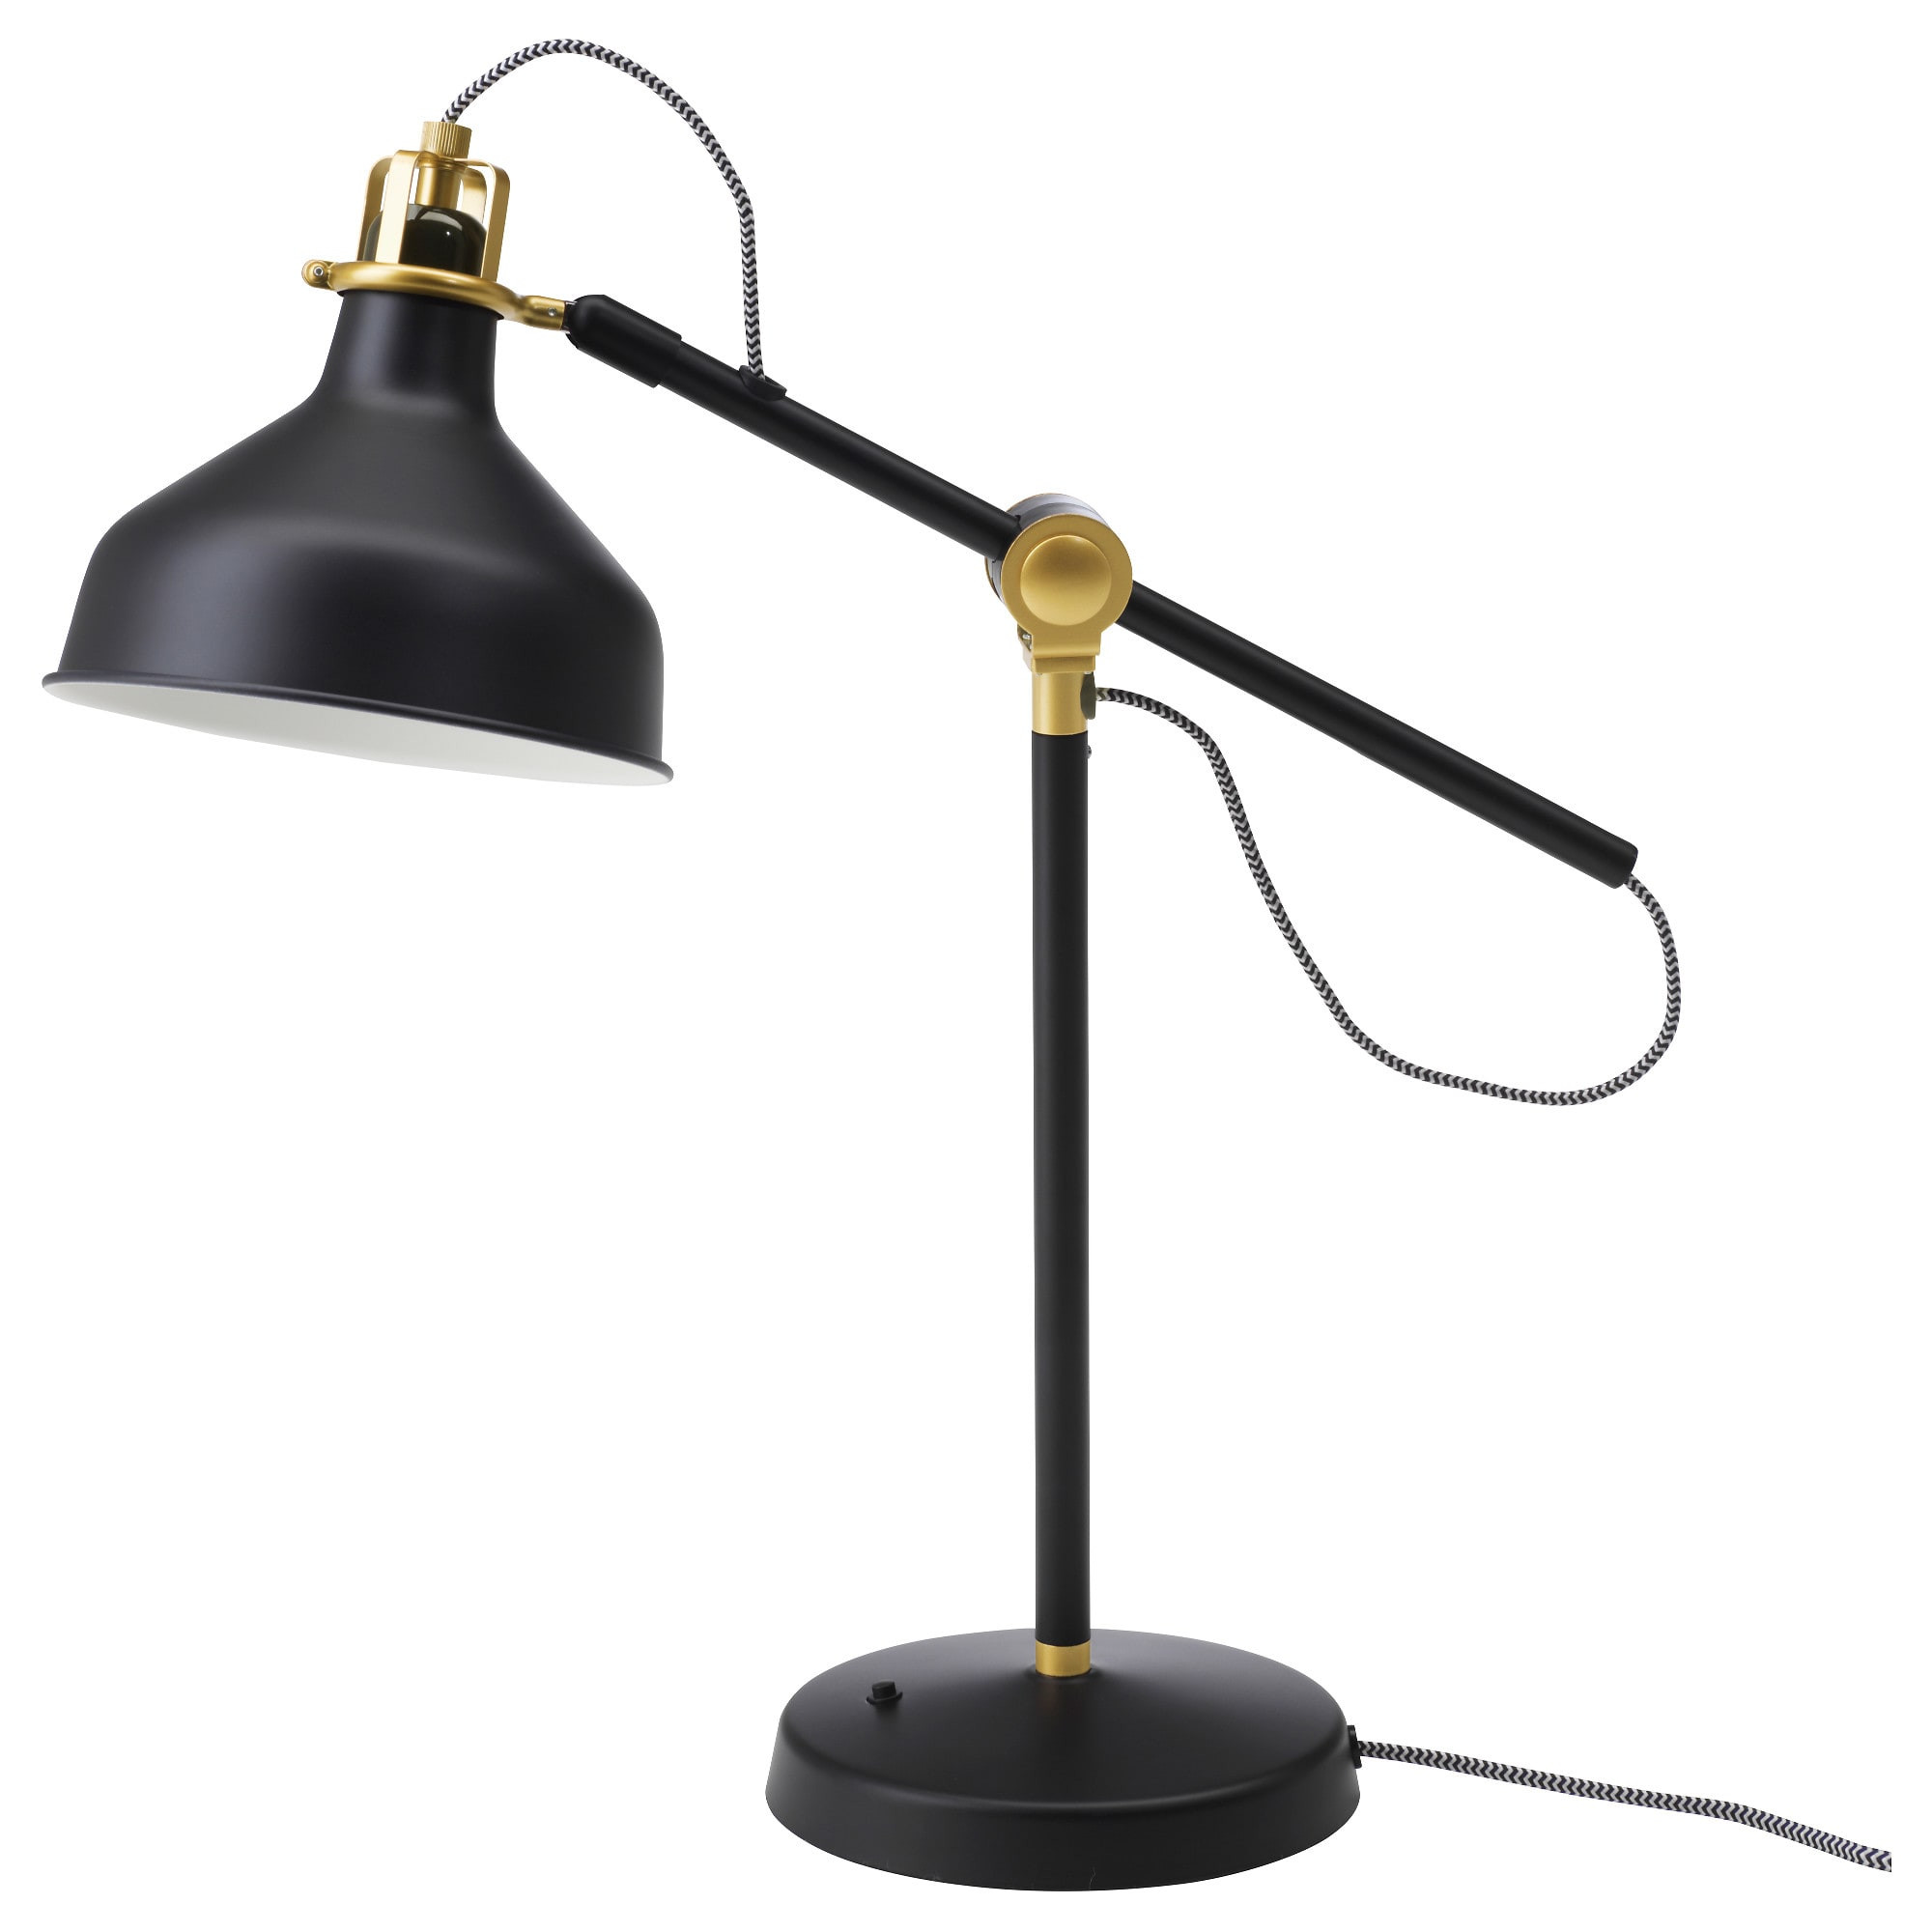 Best ideas about Ikea Desk Lamp
. Save or Pin RANARP Work lamp Black IKEA Now.